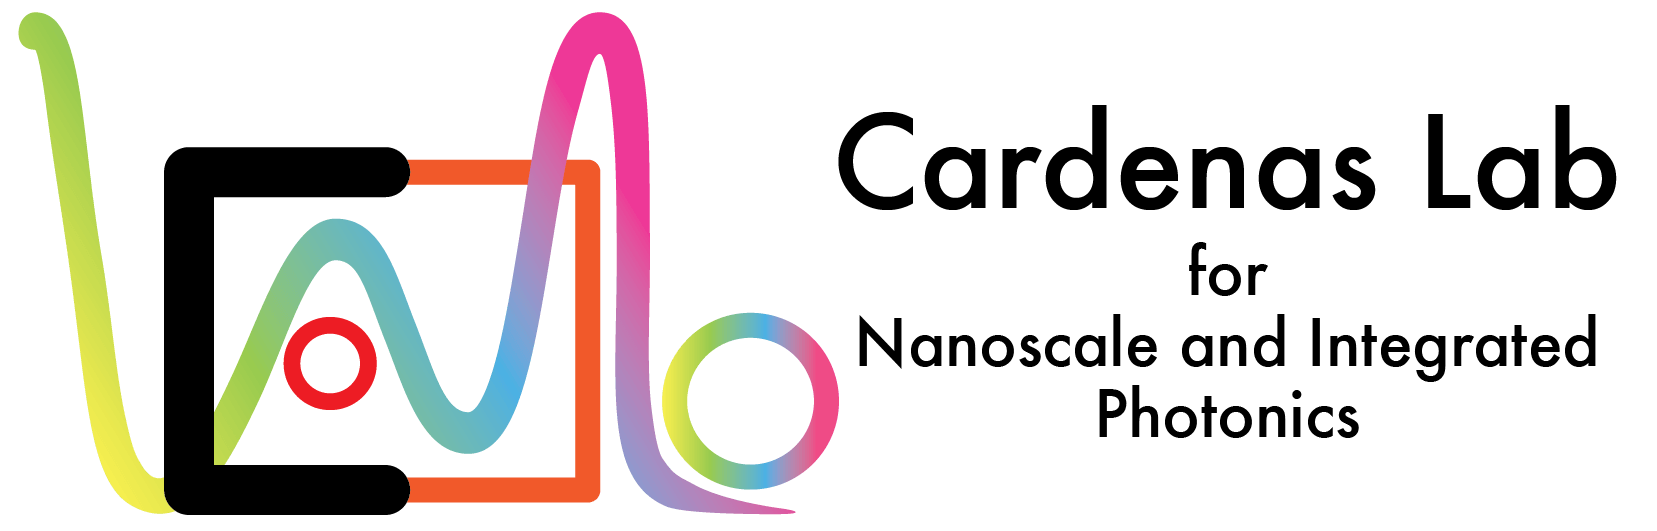 Optics Lab Logo - Cardenas Lab – Nanoscale and Integrated Photonics